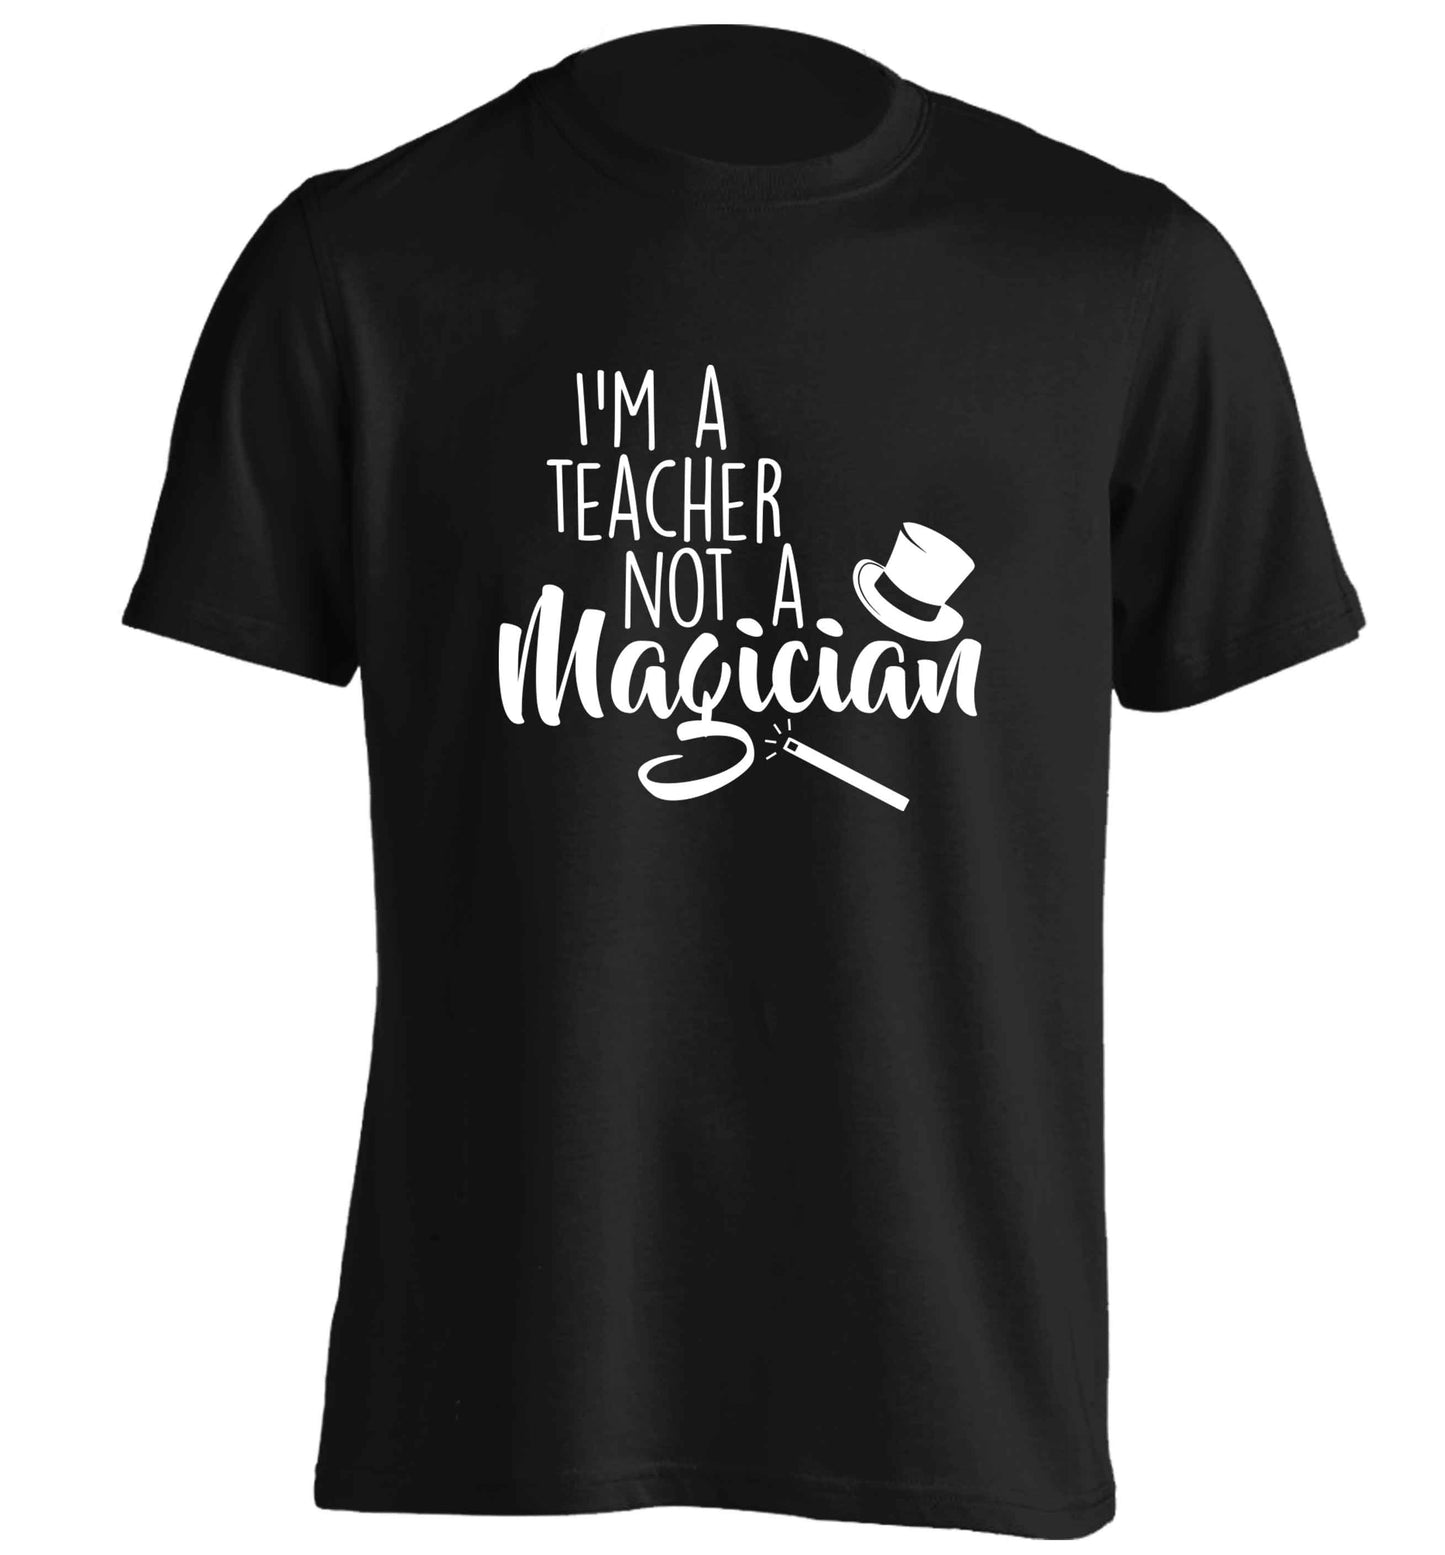 I'm a teacher not a magician adults unisex black Tshirt 2XL